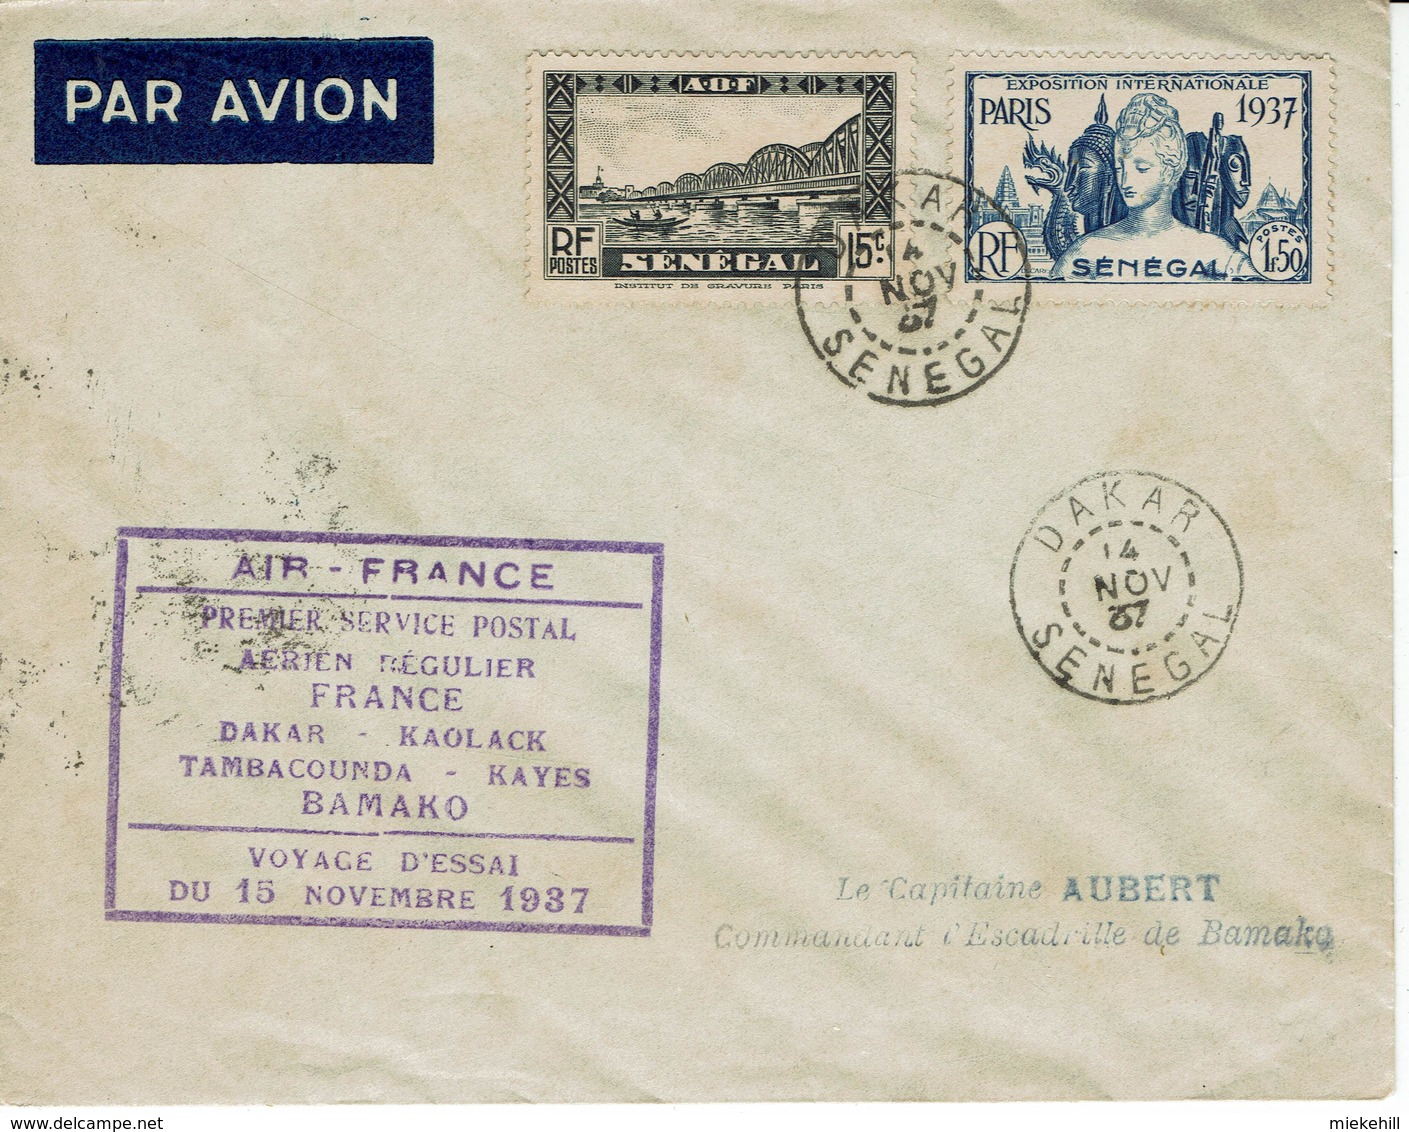 AIR-FRANCE-VOYAGE D'ESSAI-DAKAR-BAMAKO-PREMIER SERVICE POSTAL AERIEN REGULIER  15 NOVEMBRE 1937-AVIATION - Avions